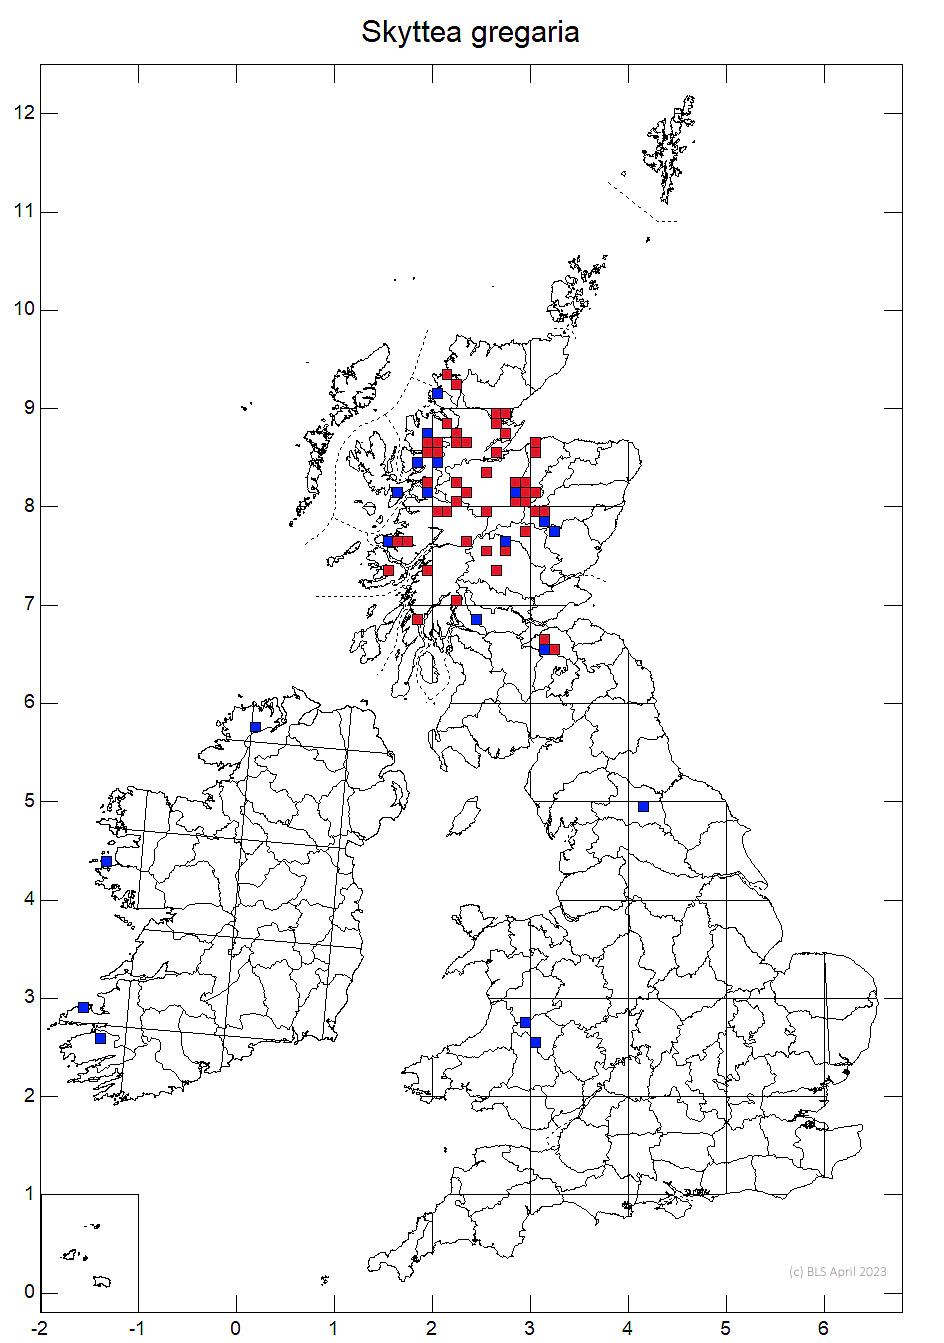 Skyttea gregaria 10km sq distribution map